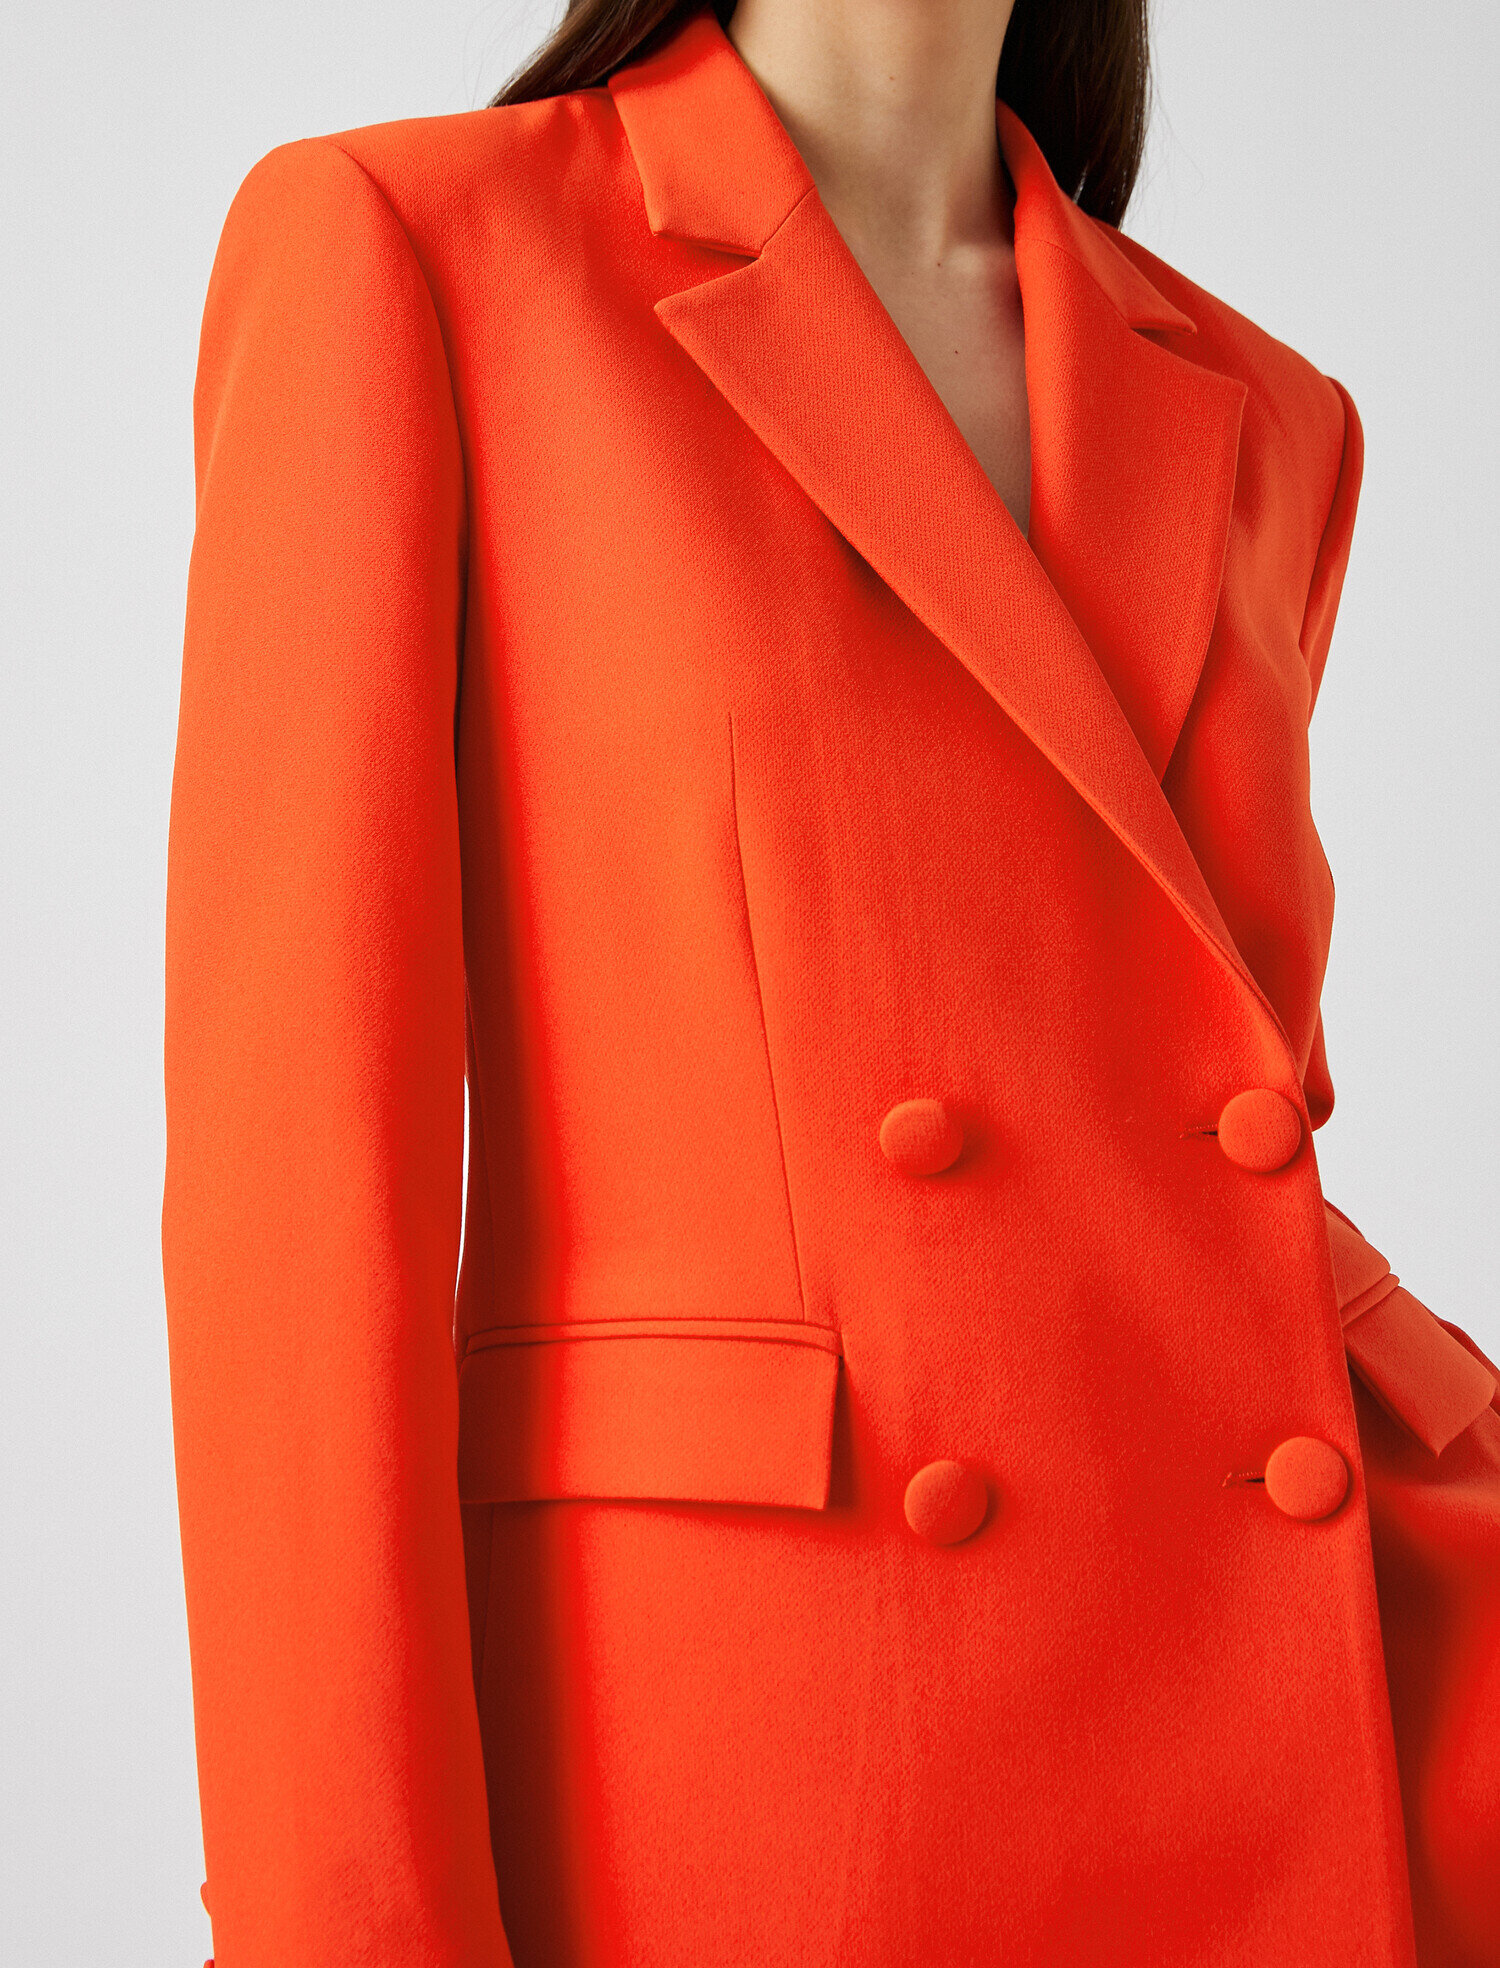 Zara blazer discount 71% Orange M WOMEN FASHION Jackets Blazer Oversize 